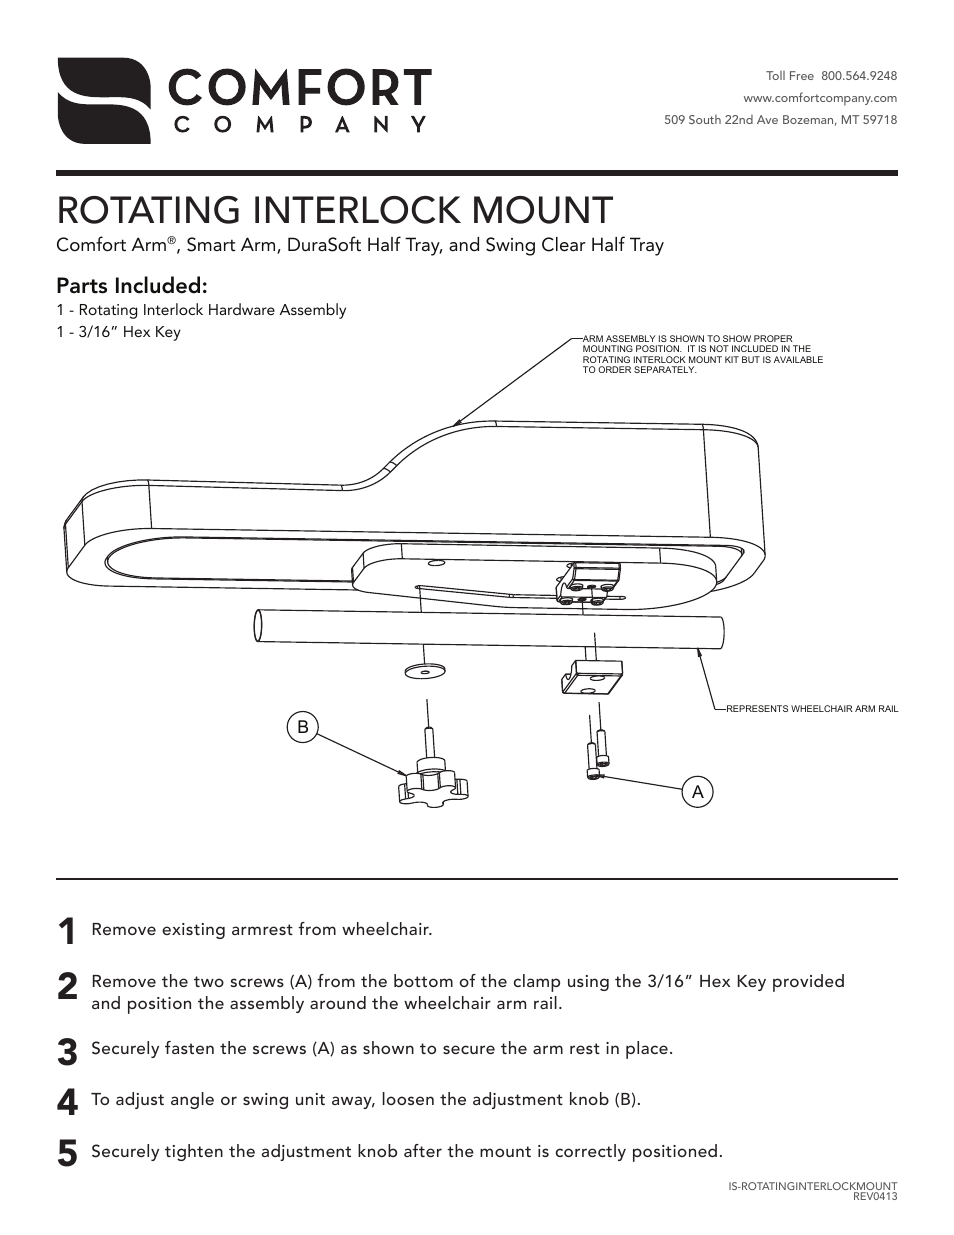 Rotating Interlock Mount